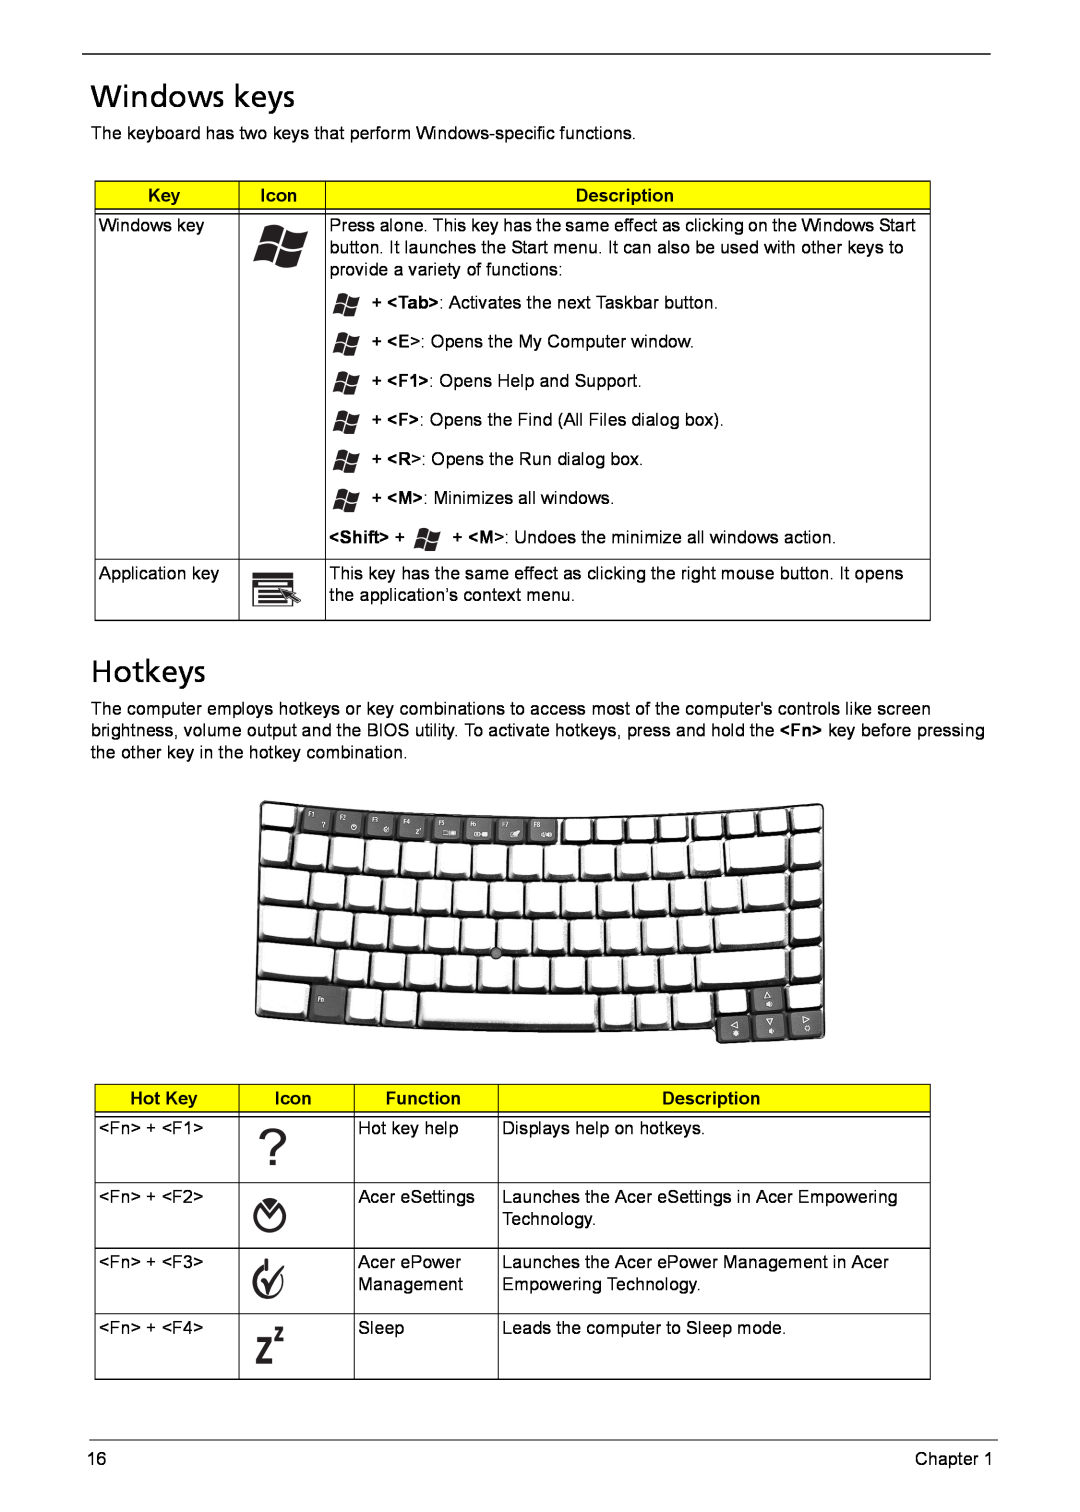 Acer 6410, 6460 manual Windows keys, Hotkeys, Shift +, Hot Key, Icon, Description, Function 